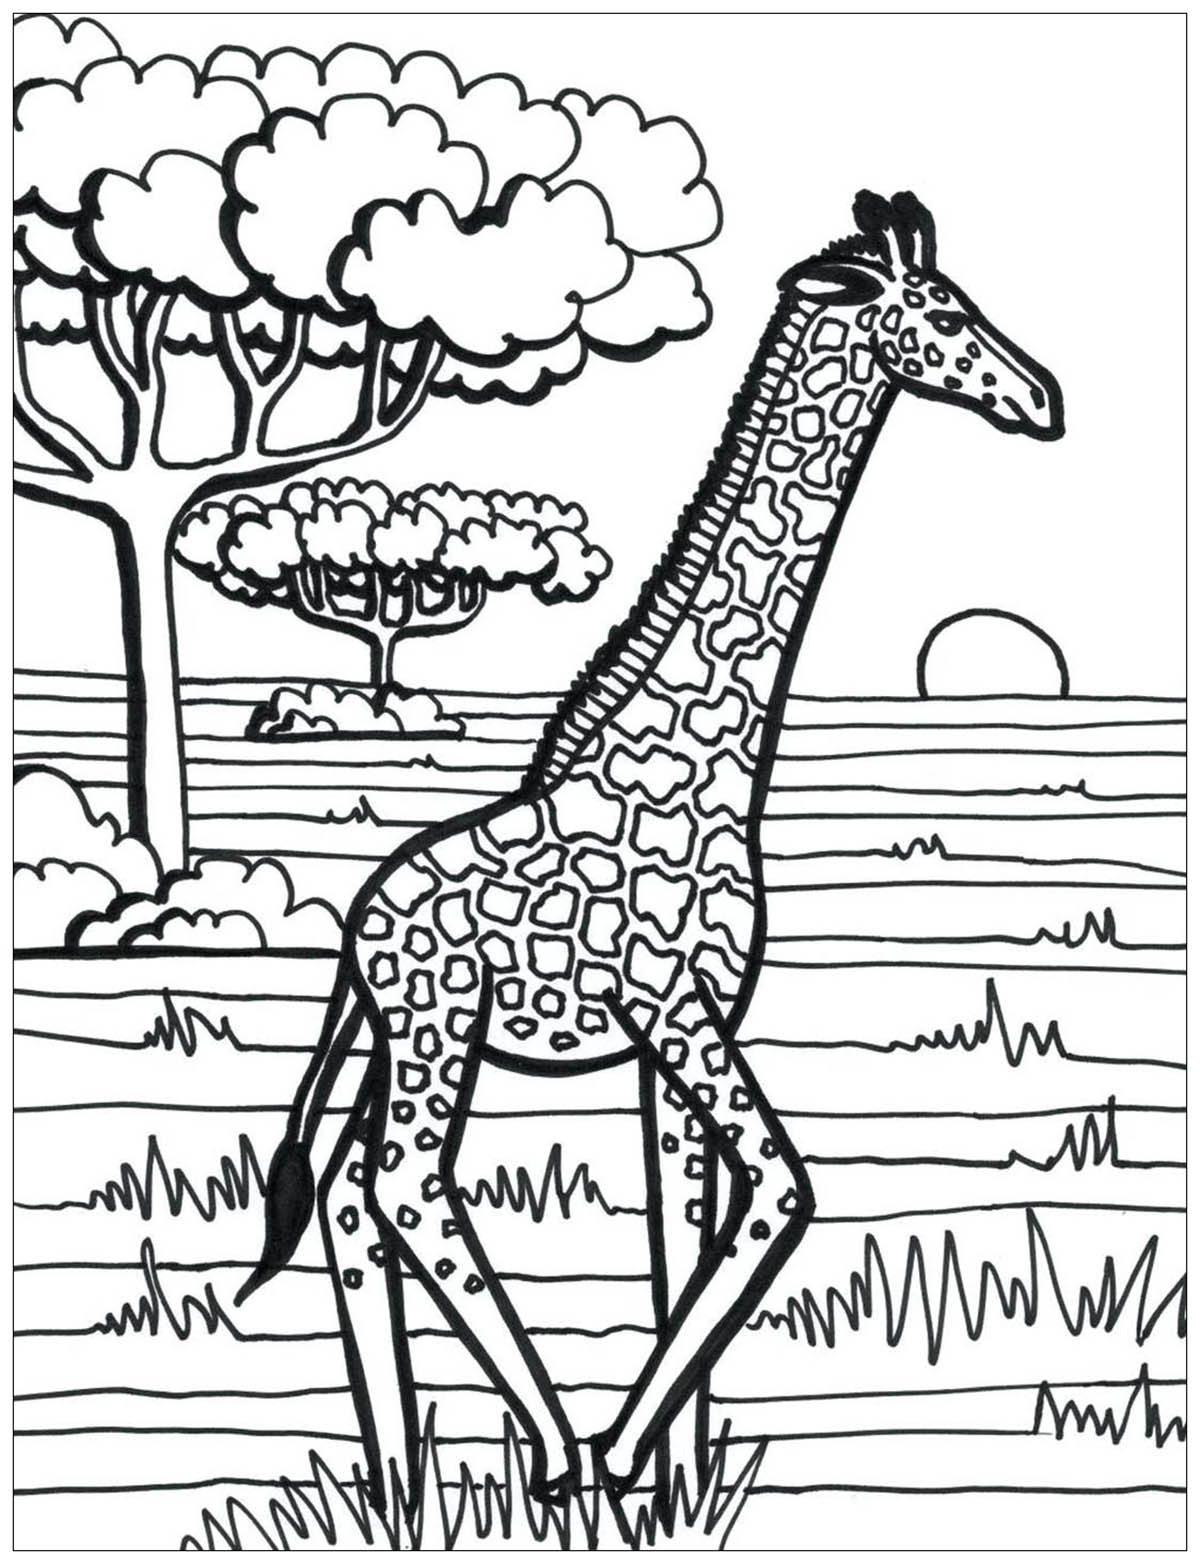 Au beau milieu de la savane, cette girafe court !